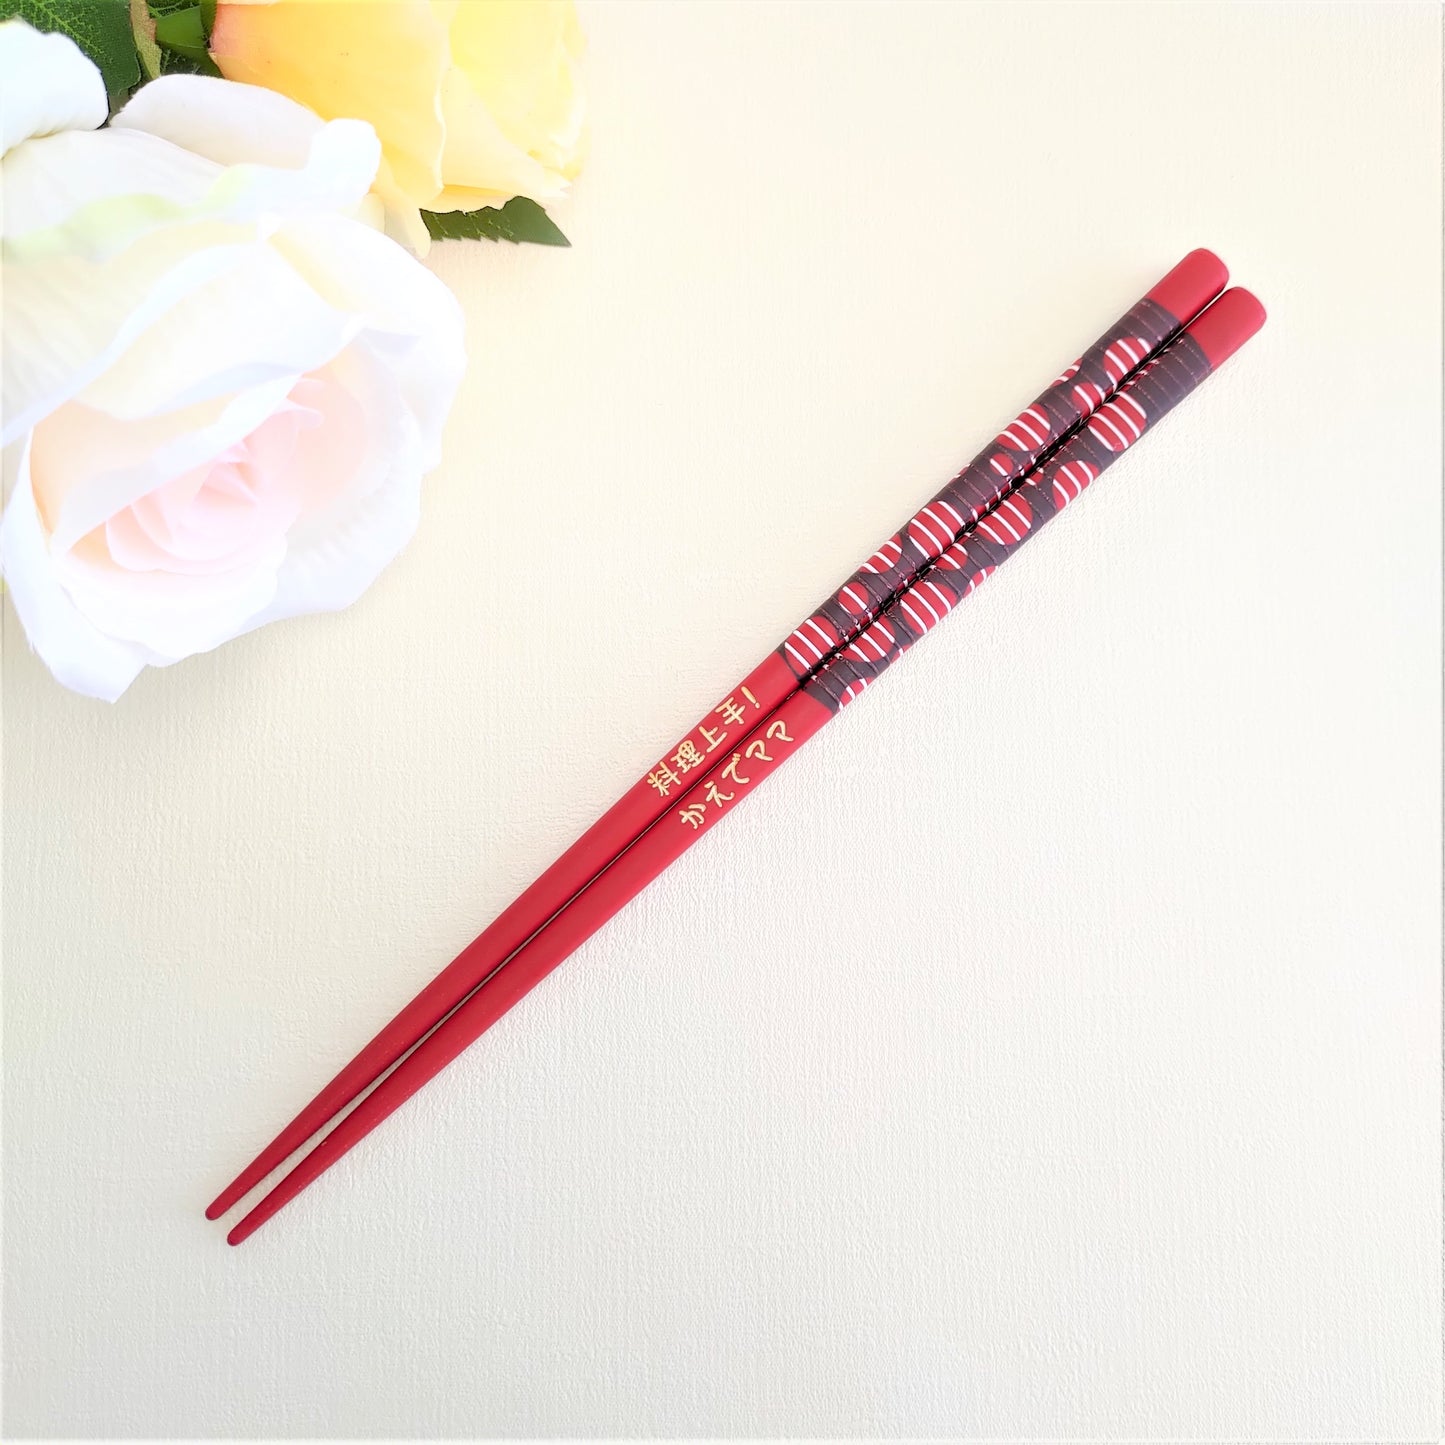 Polka dots original design Japanese chopsticks black red - DOUBLE PAIR